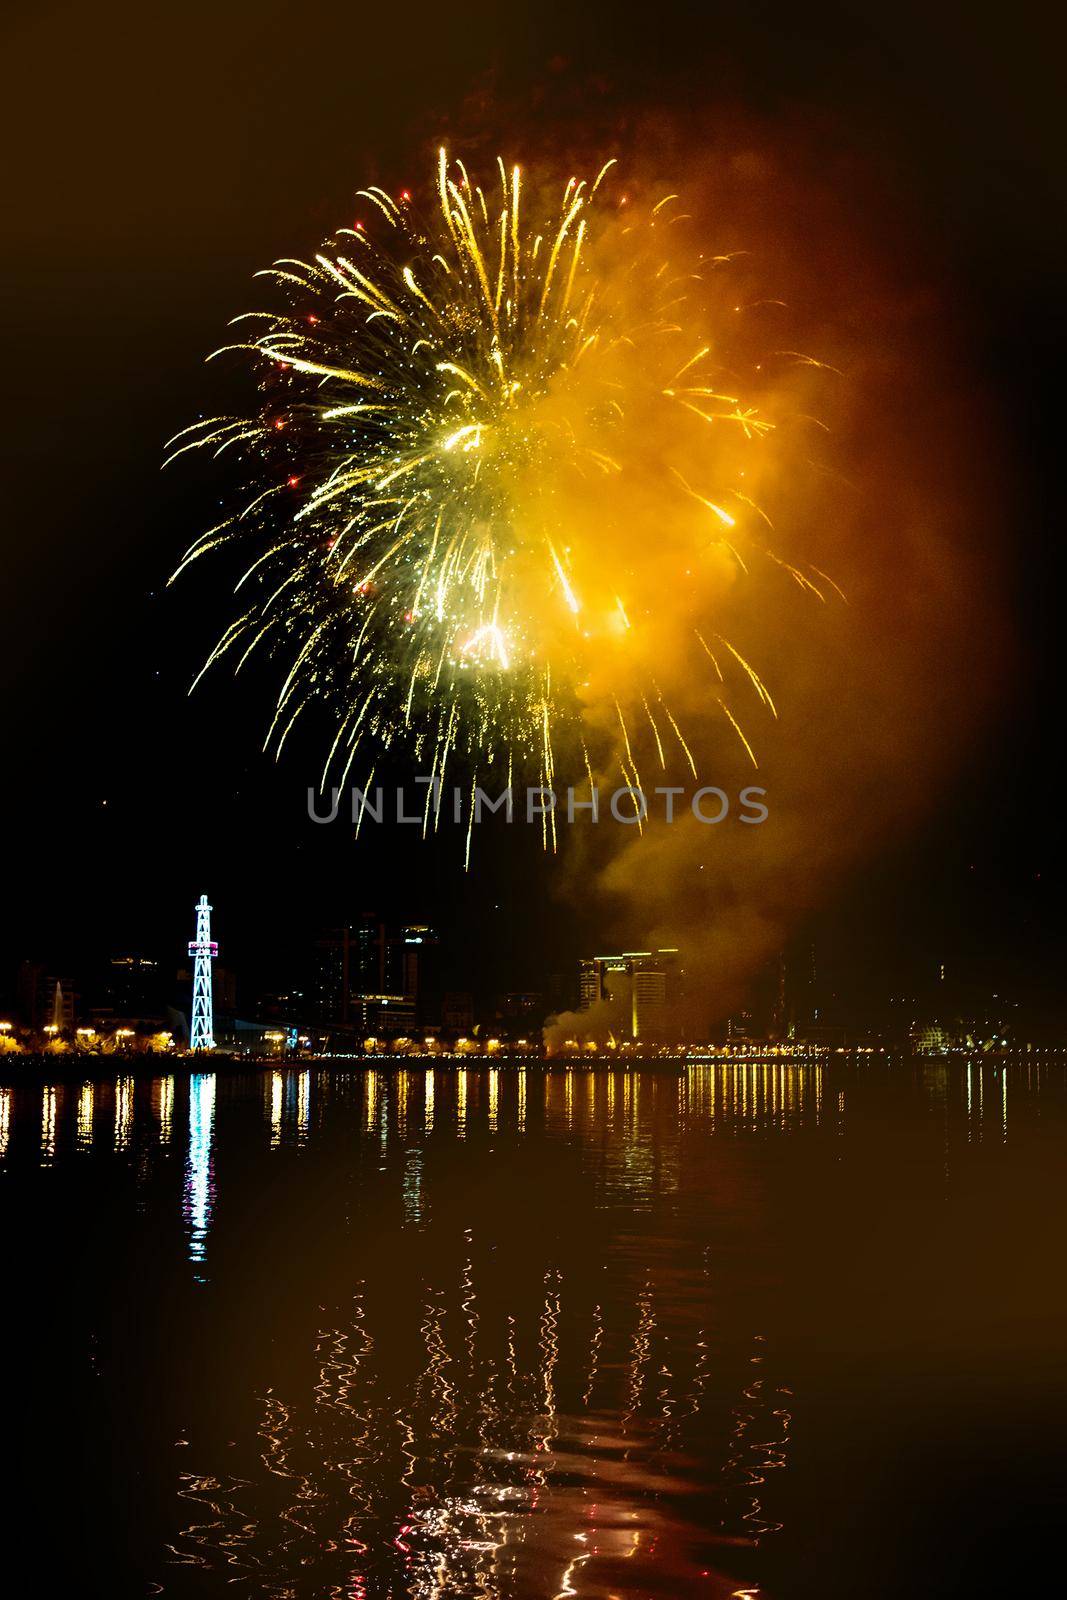 Fireworks in the night sky, Baku by tan4ikk1